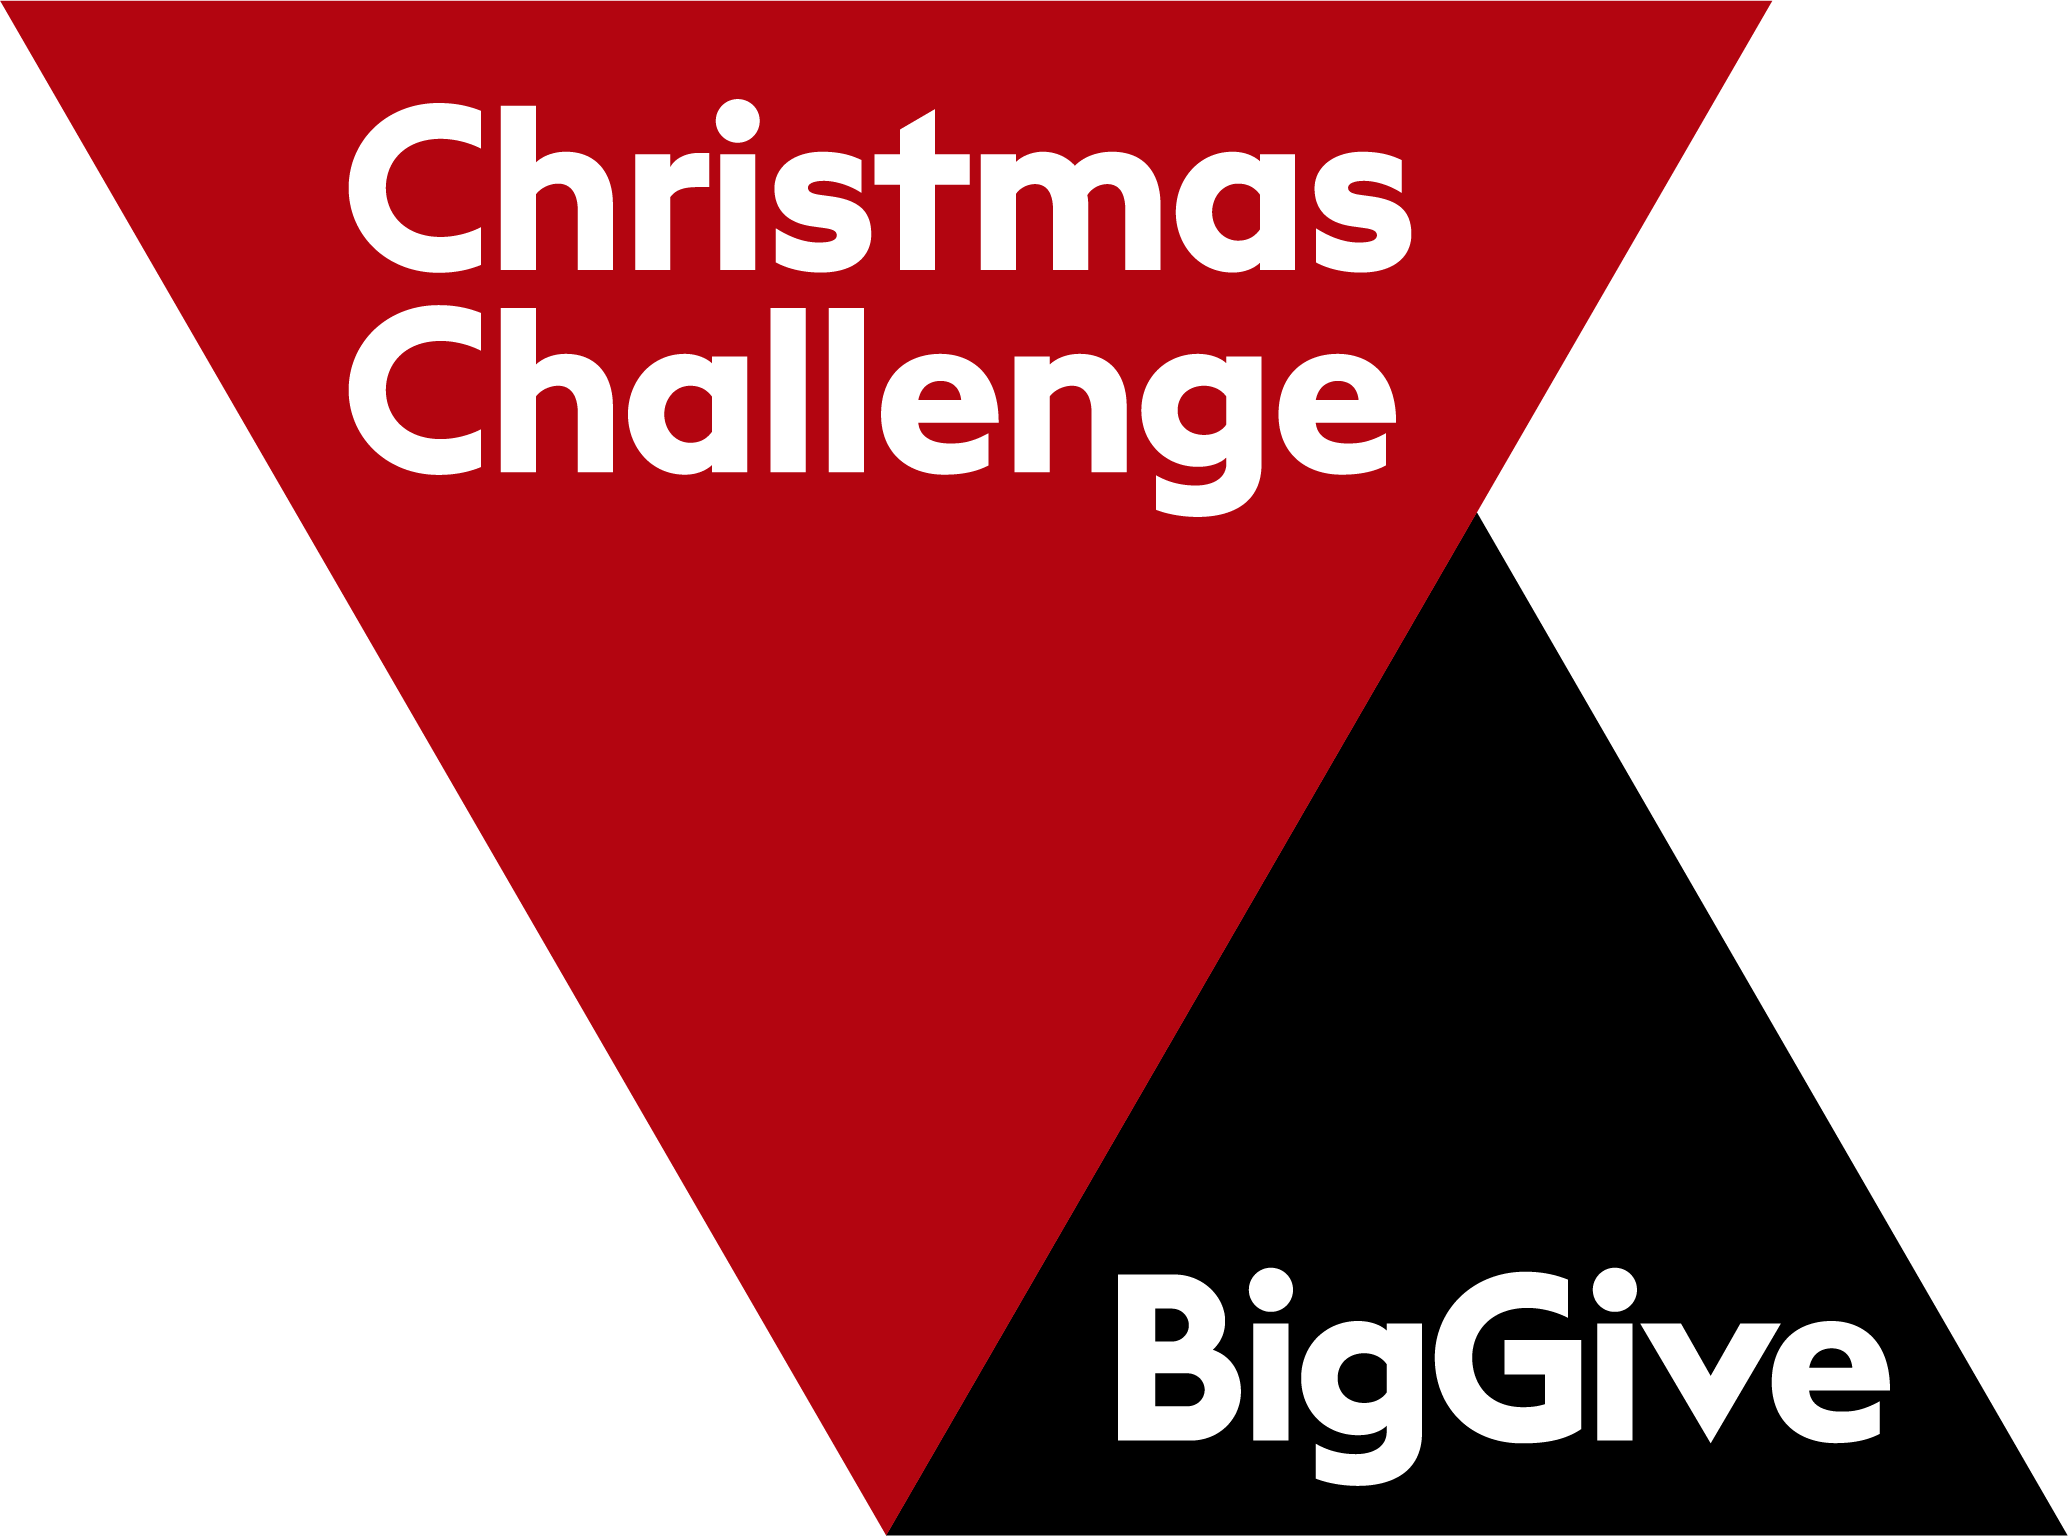 Big Give logo